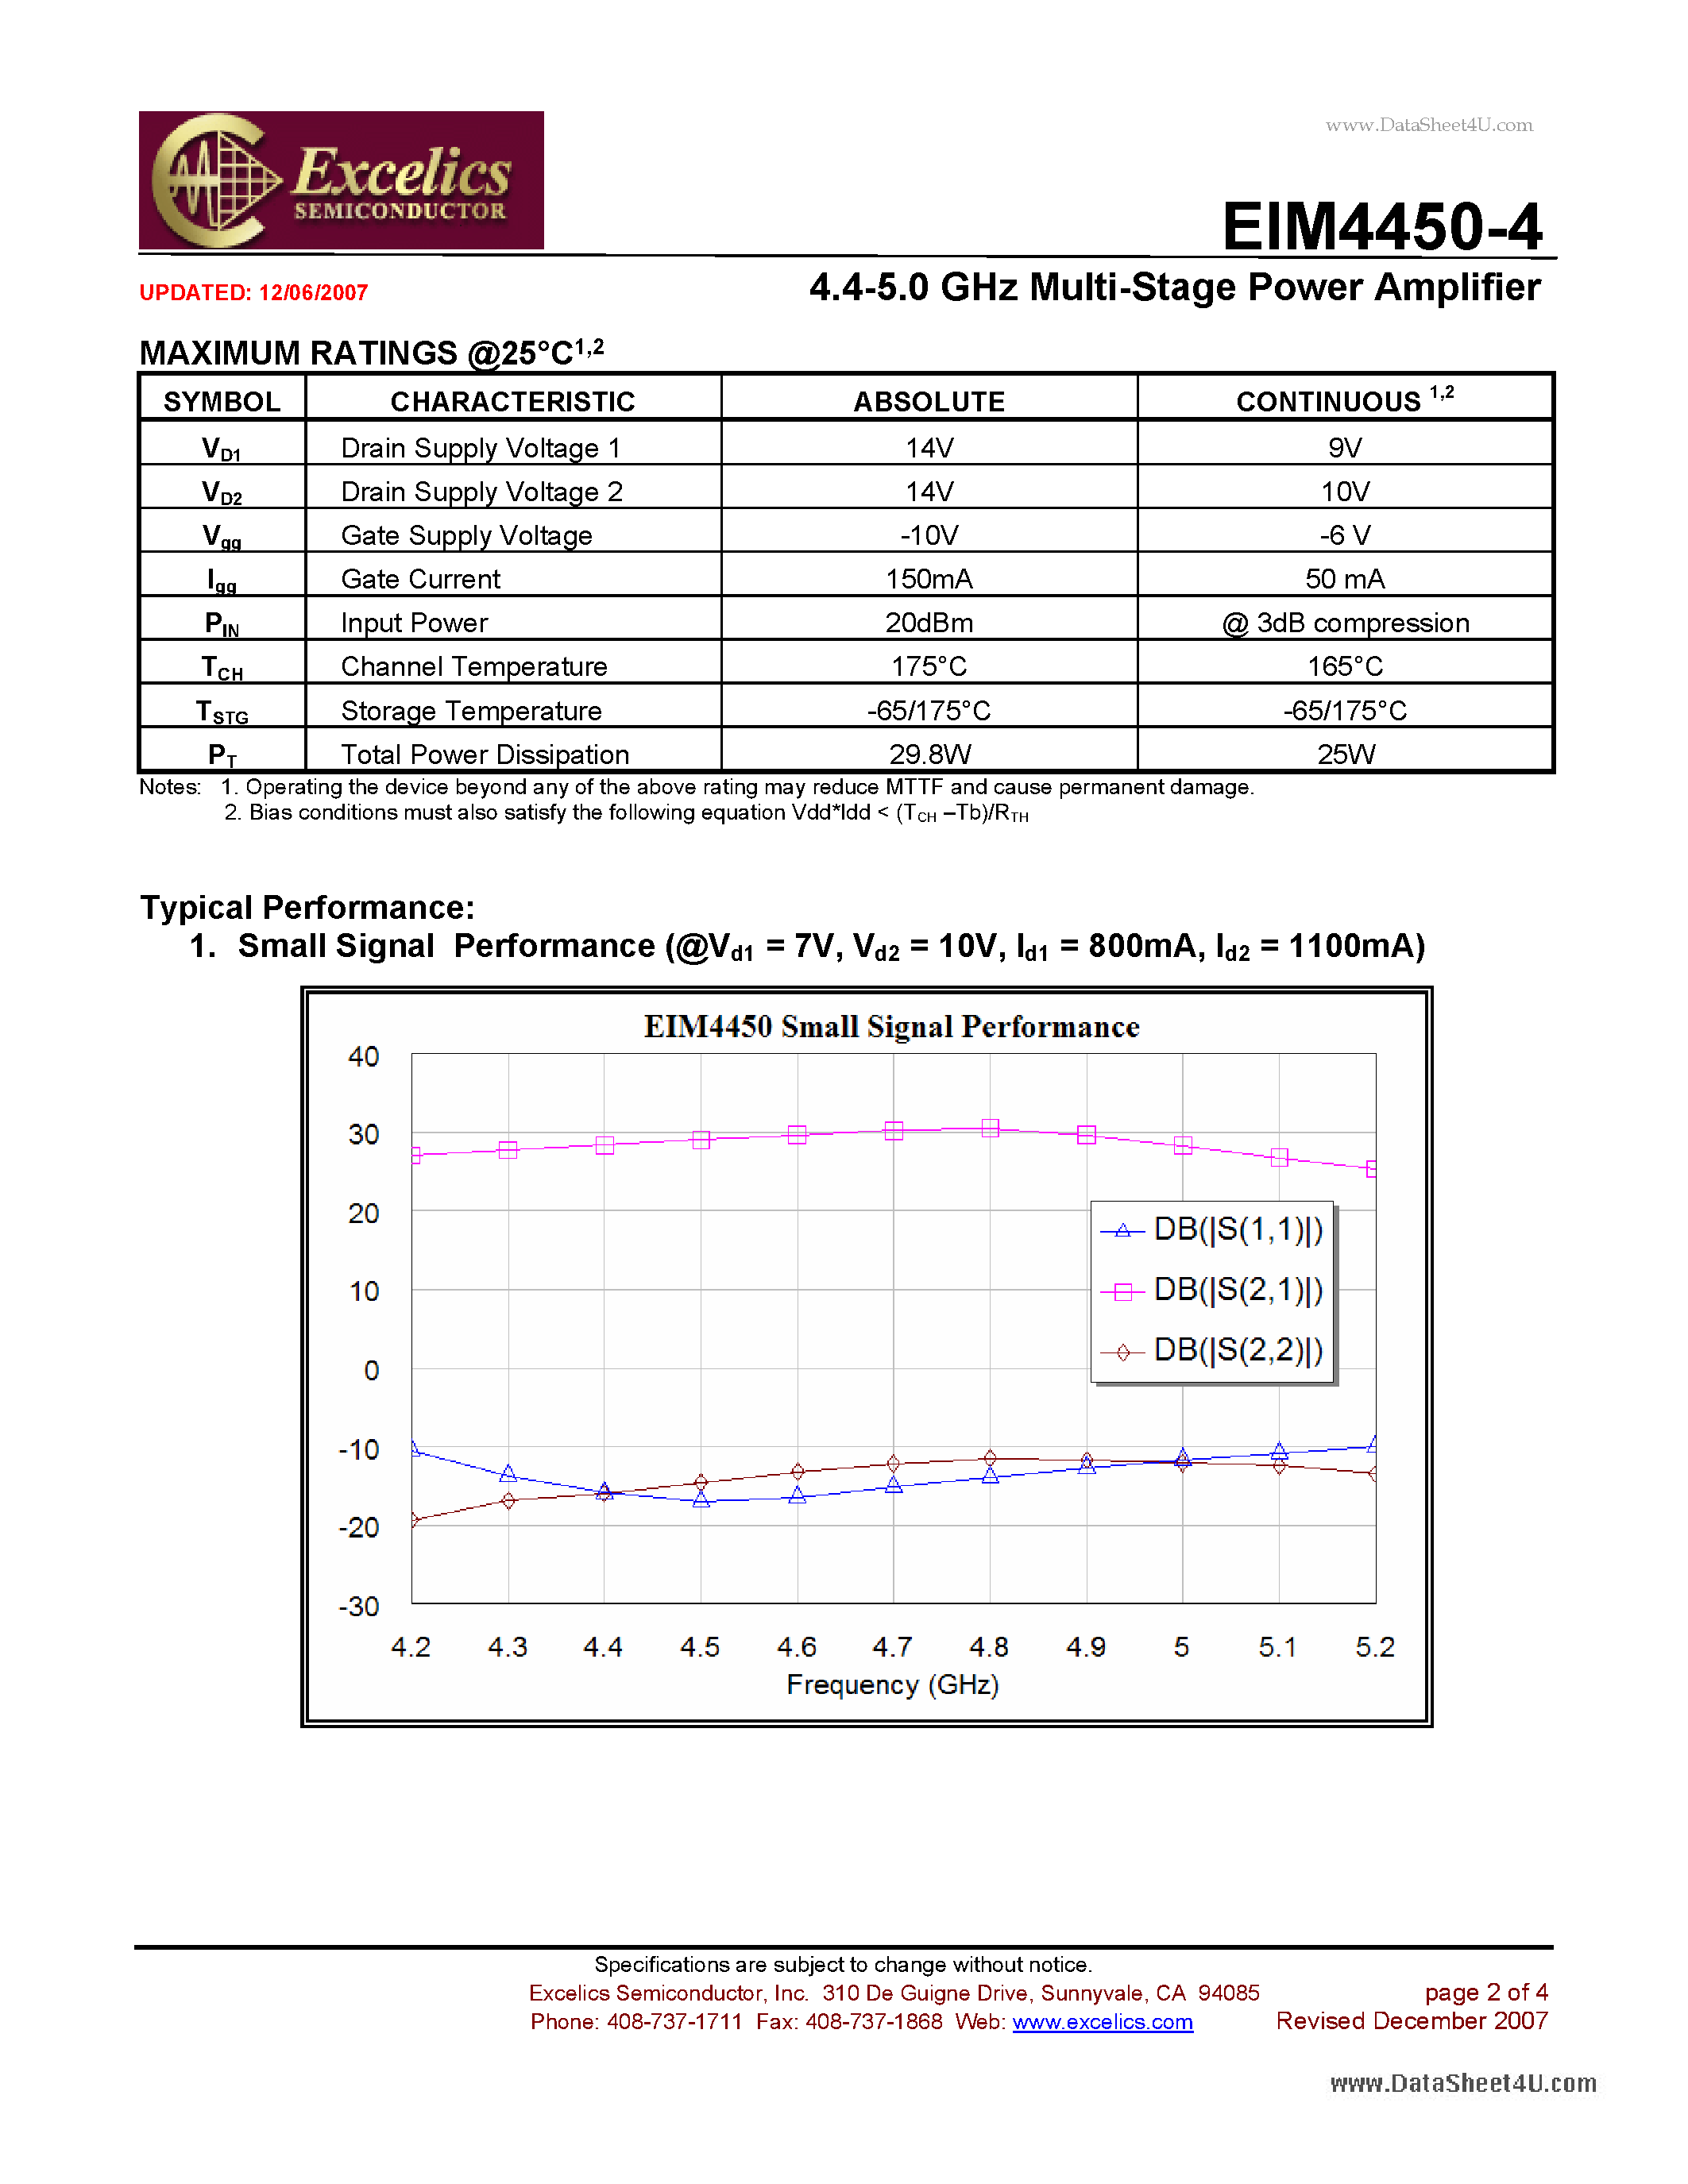 Даташит EIM4450-4 - 4.4-5.0 GHz Multi-Stage Power Amplifier страница 2